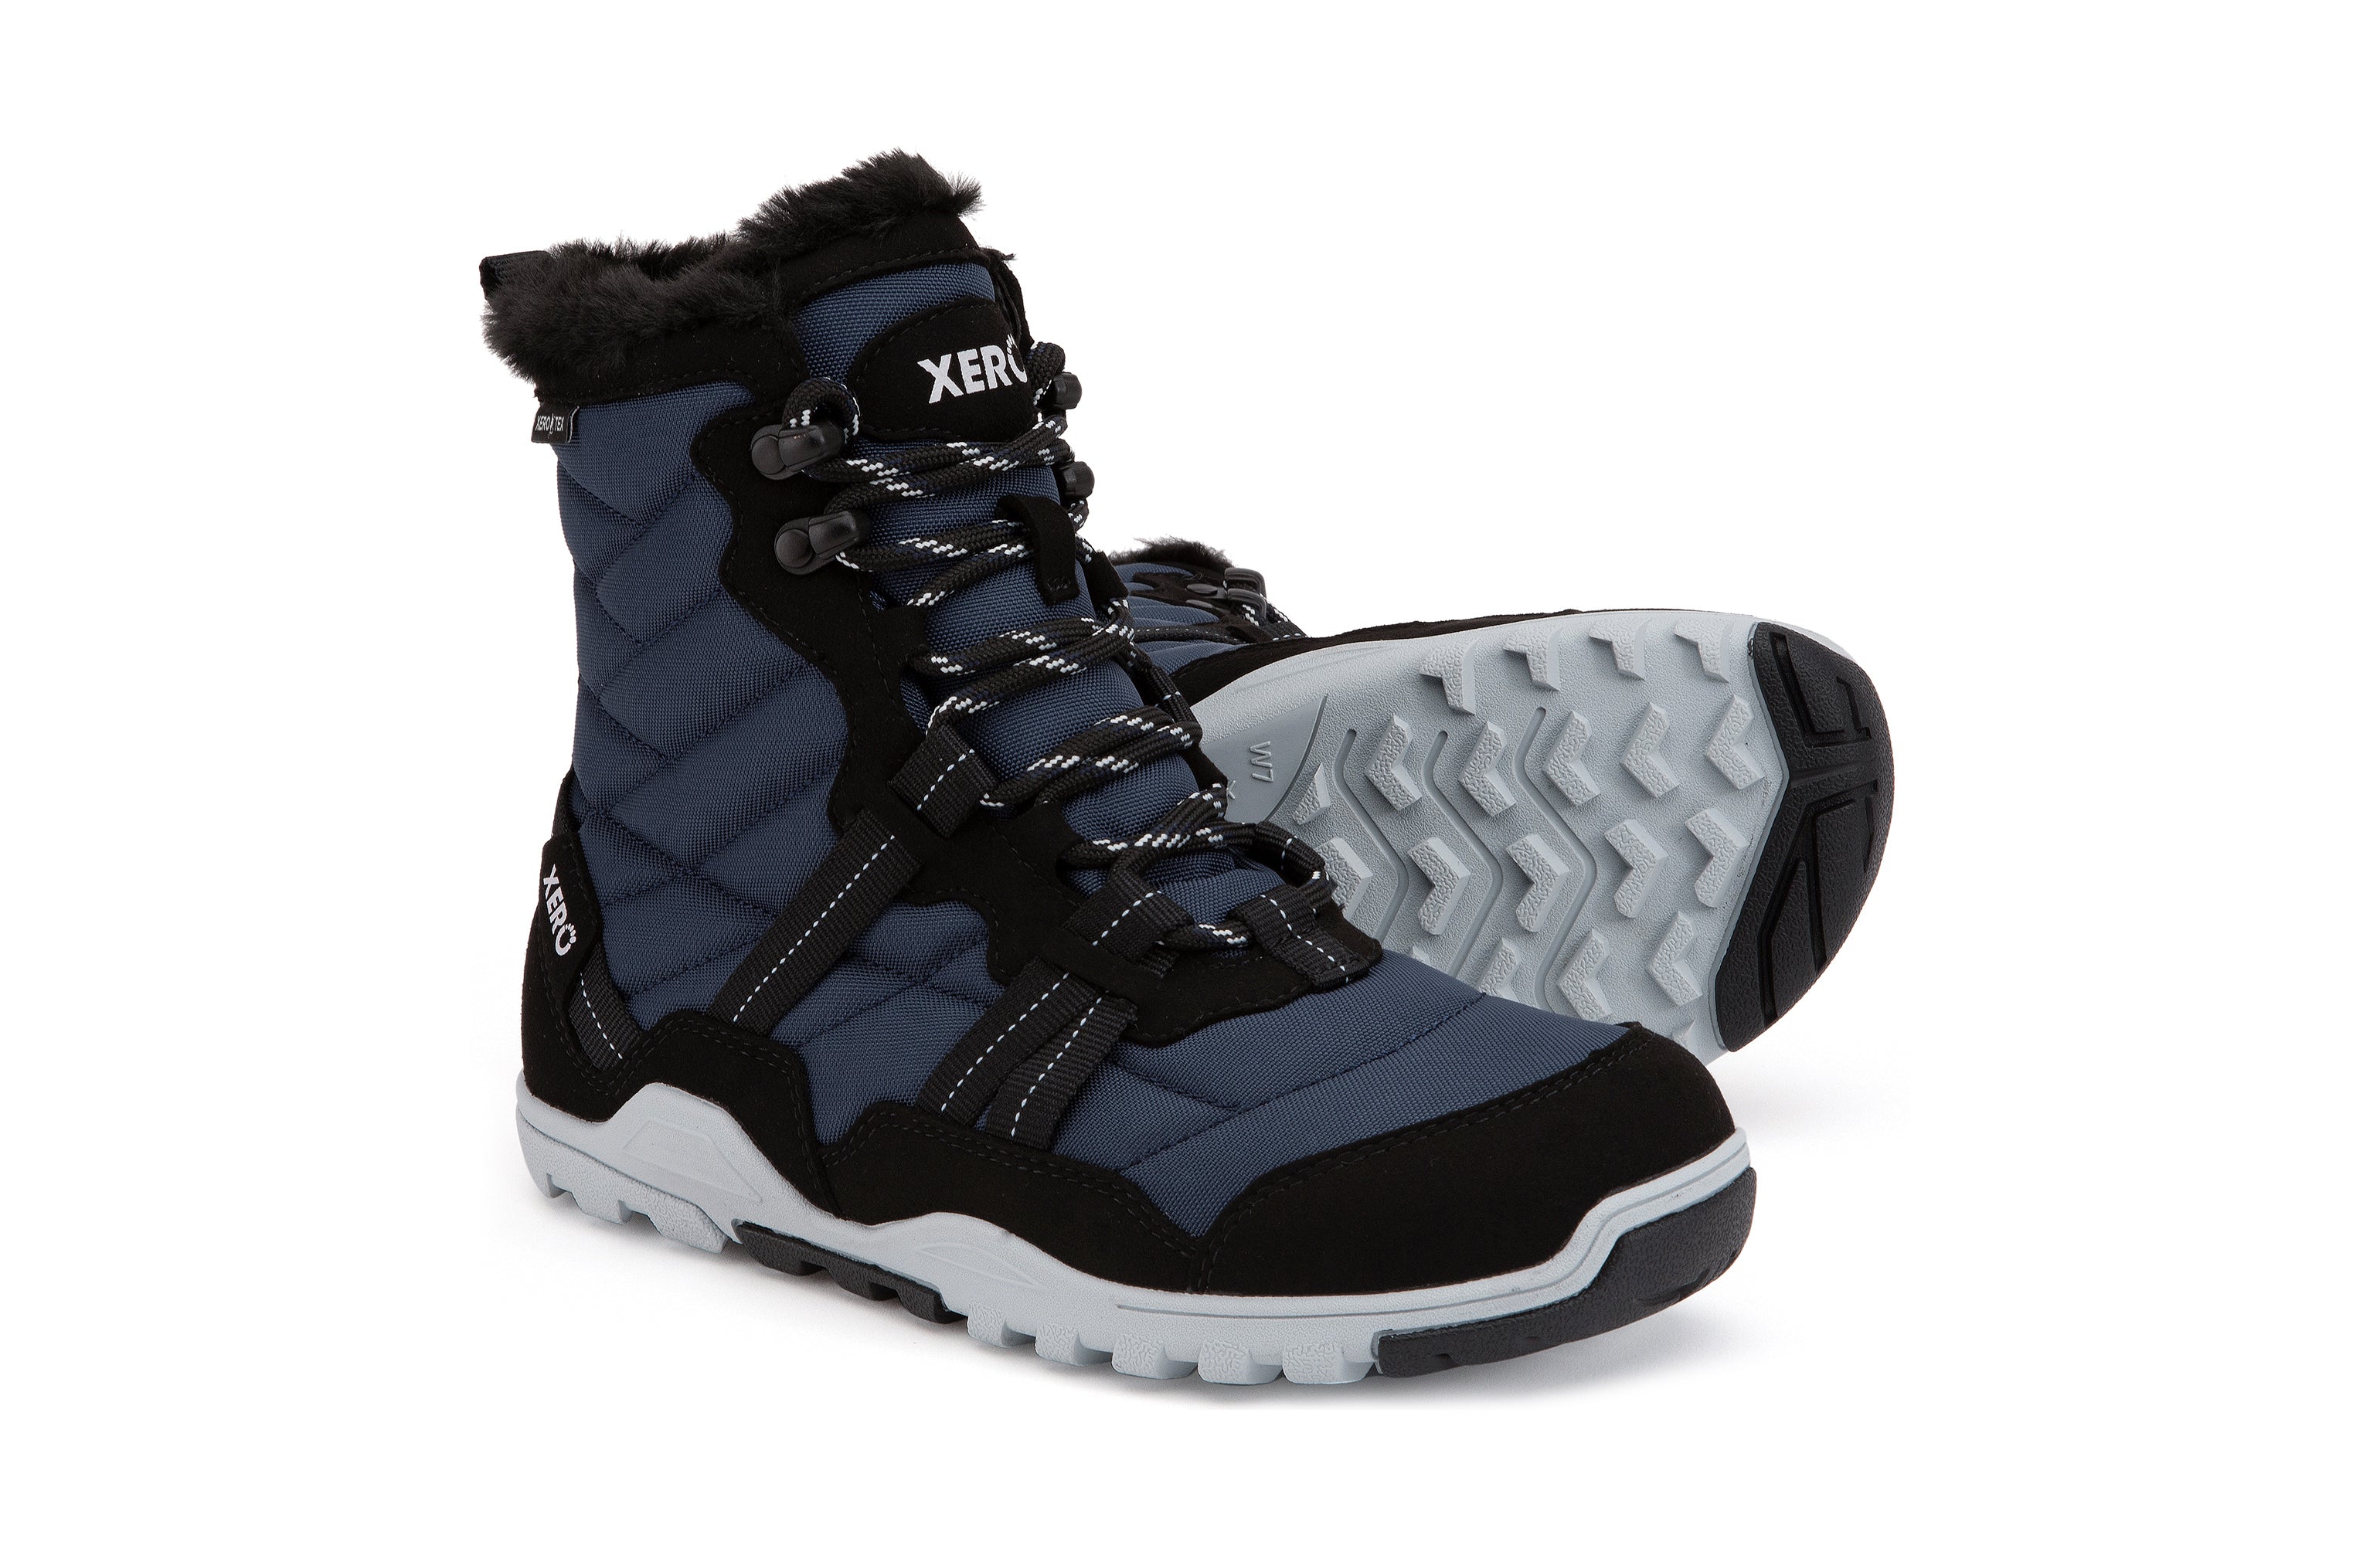 Xero Shoes Alpine Womens barfods vinterstøvler til kvinder i farven navy / black, par